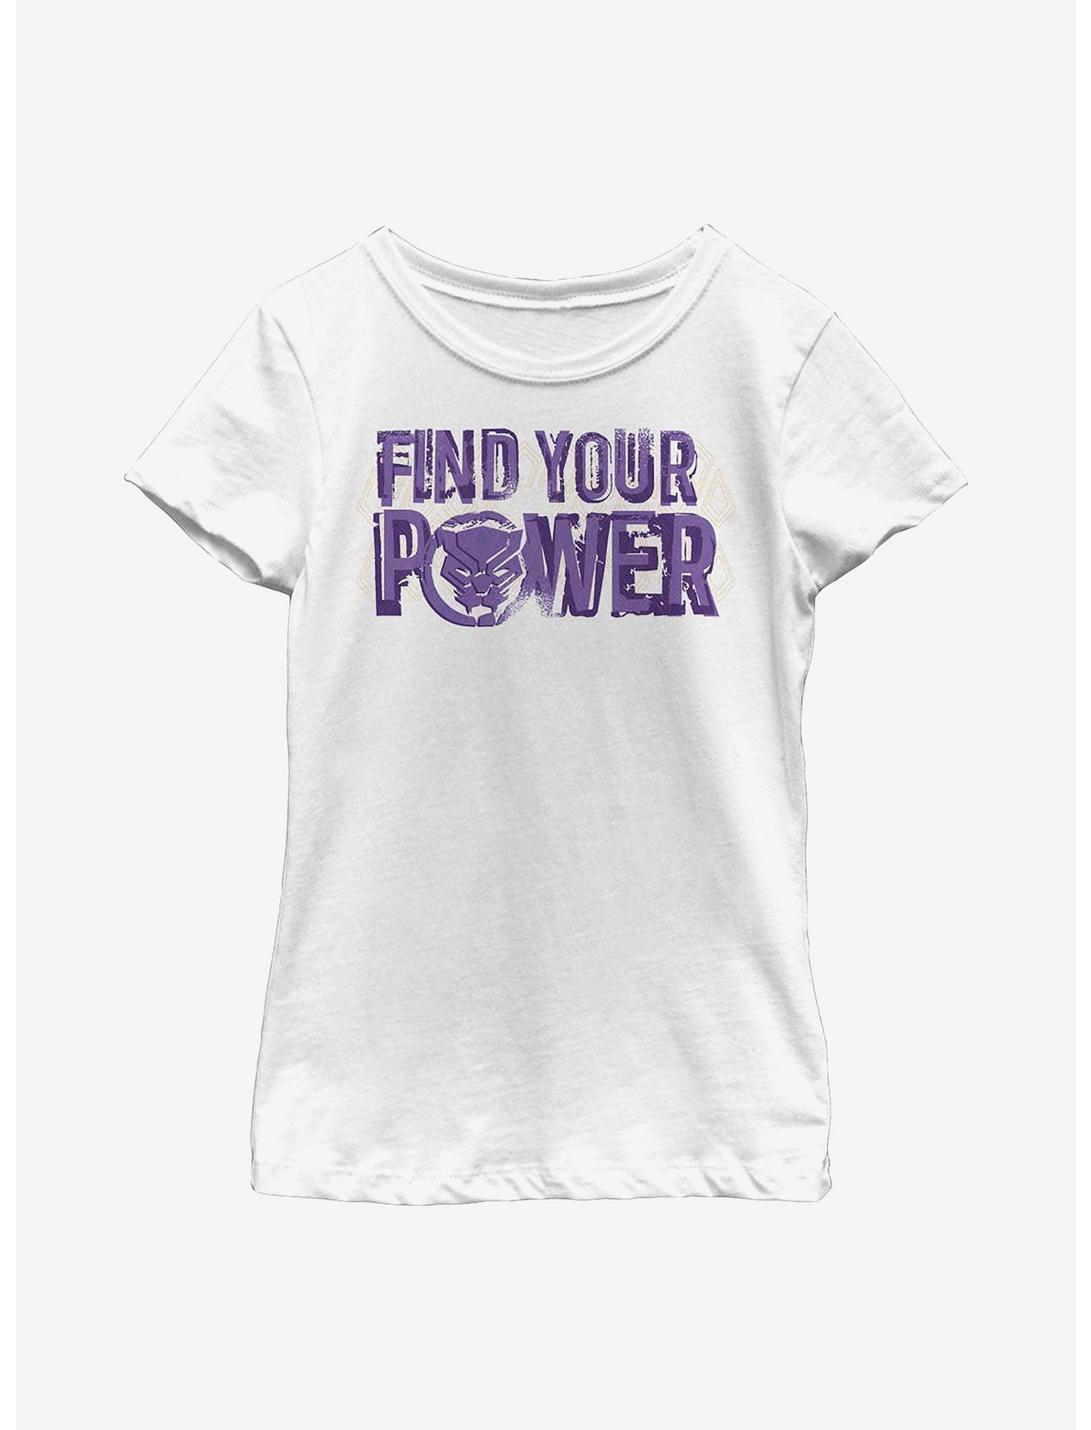 Marvel Black Panther Power Youth Girls T-Shirt, WHITE, hi-res